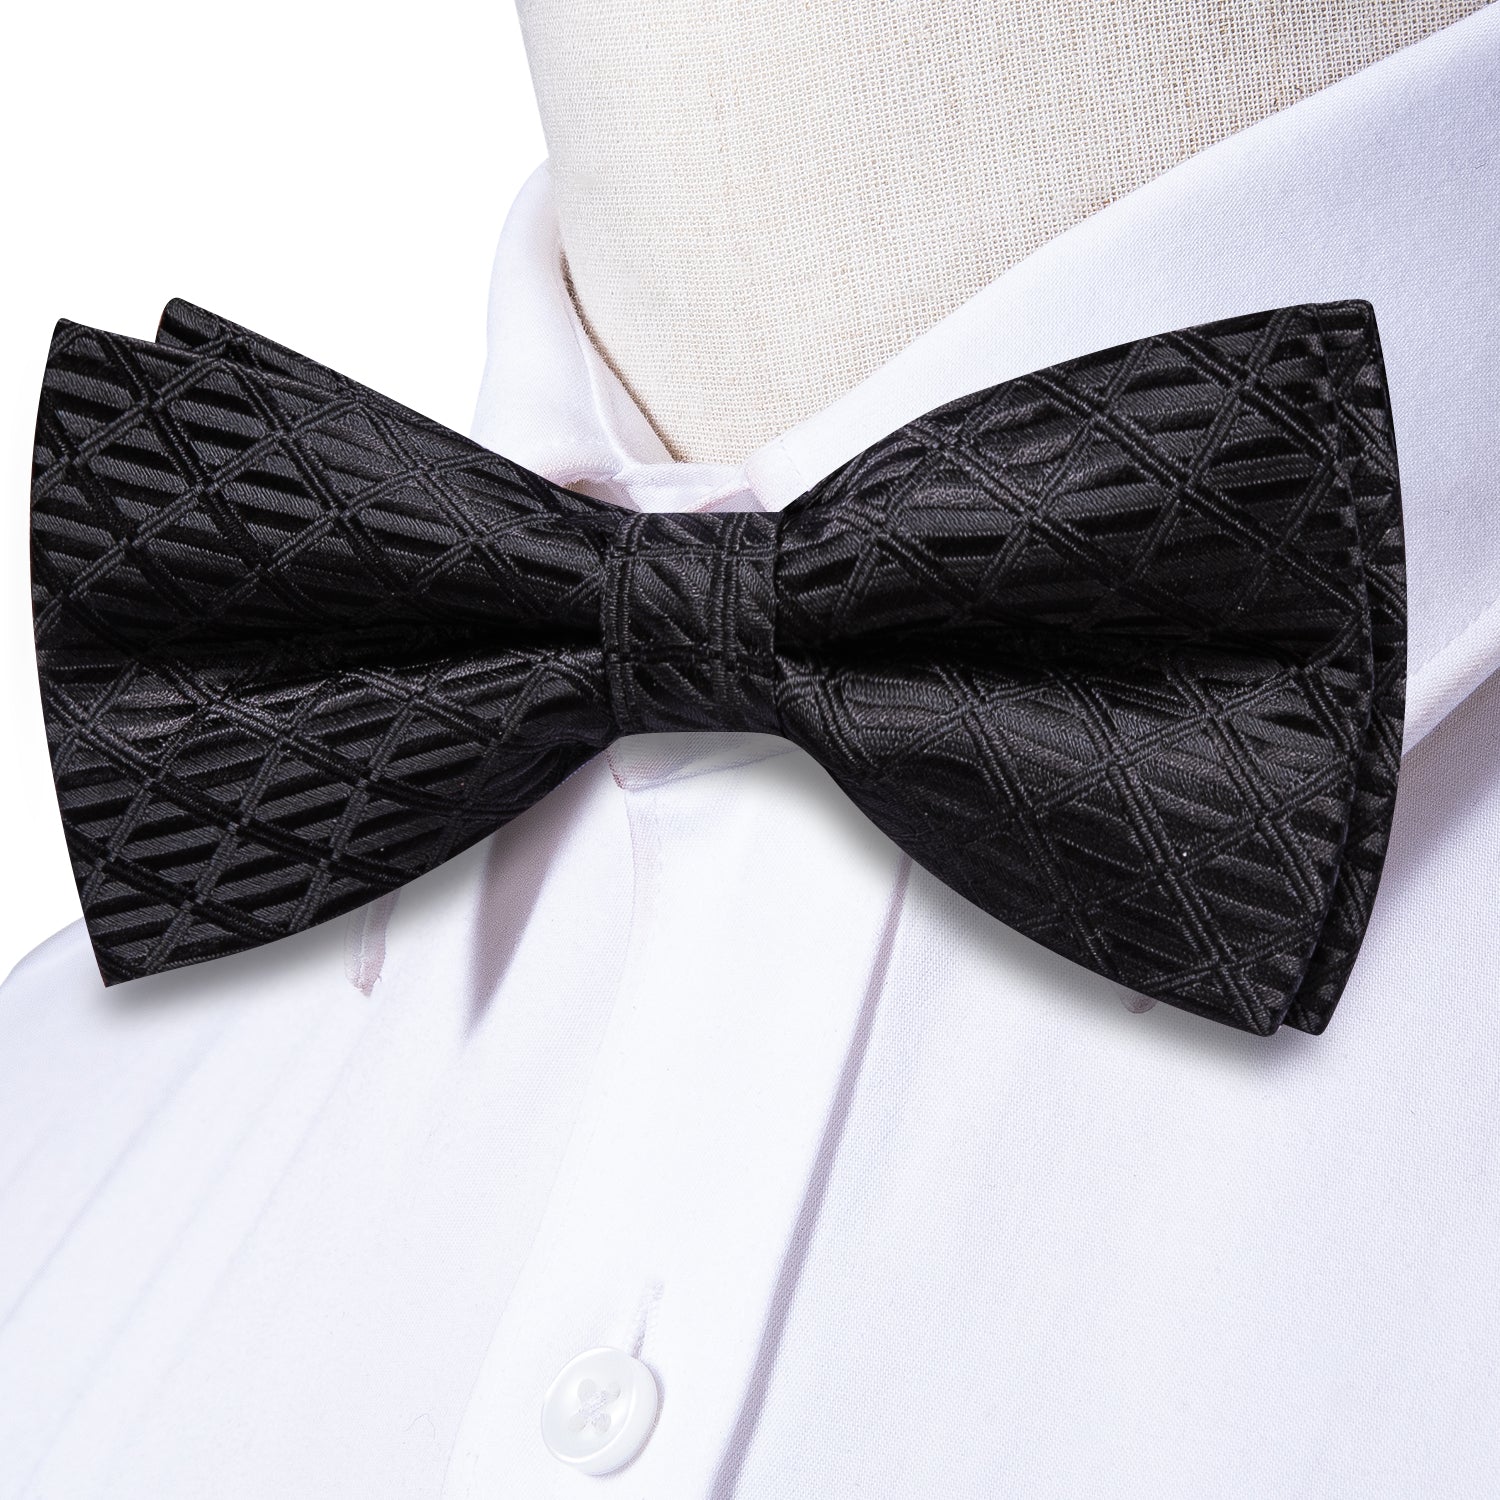 Hi-Tie Black Novelty Pre-tied Bow Tie Hanky Cufflinks Set